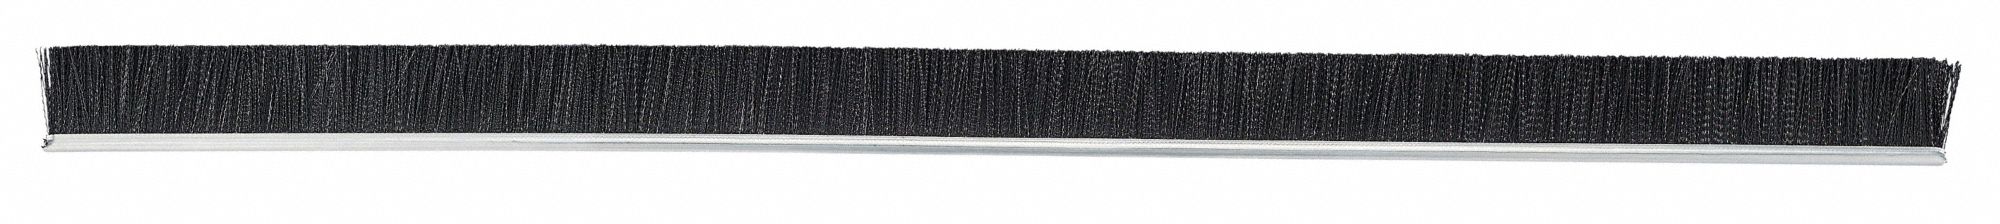 3 Trim 3 Overall Length 5/16 Thick Tanis Brush MB700836 Galvanized Backed Strip Brush 0.020 Bristle Diameter Black Nylon Bristles